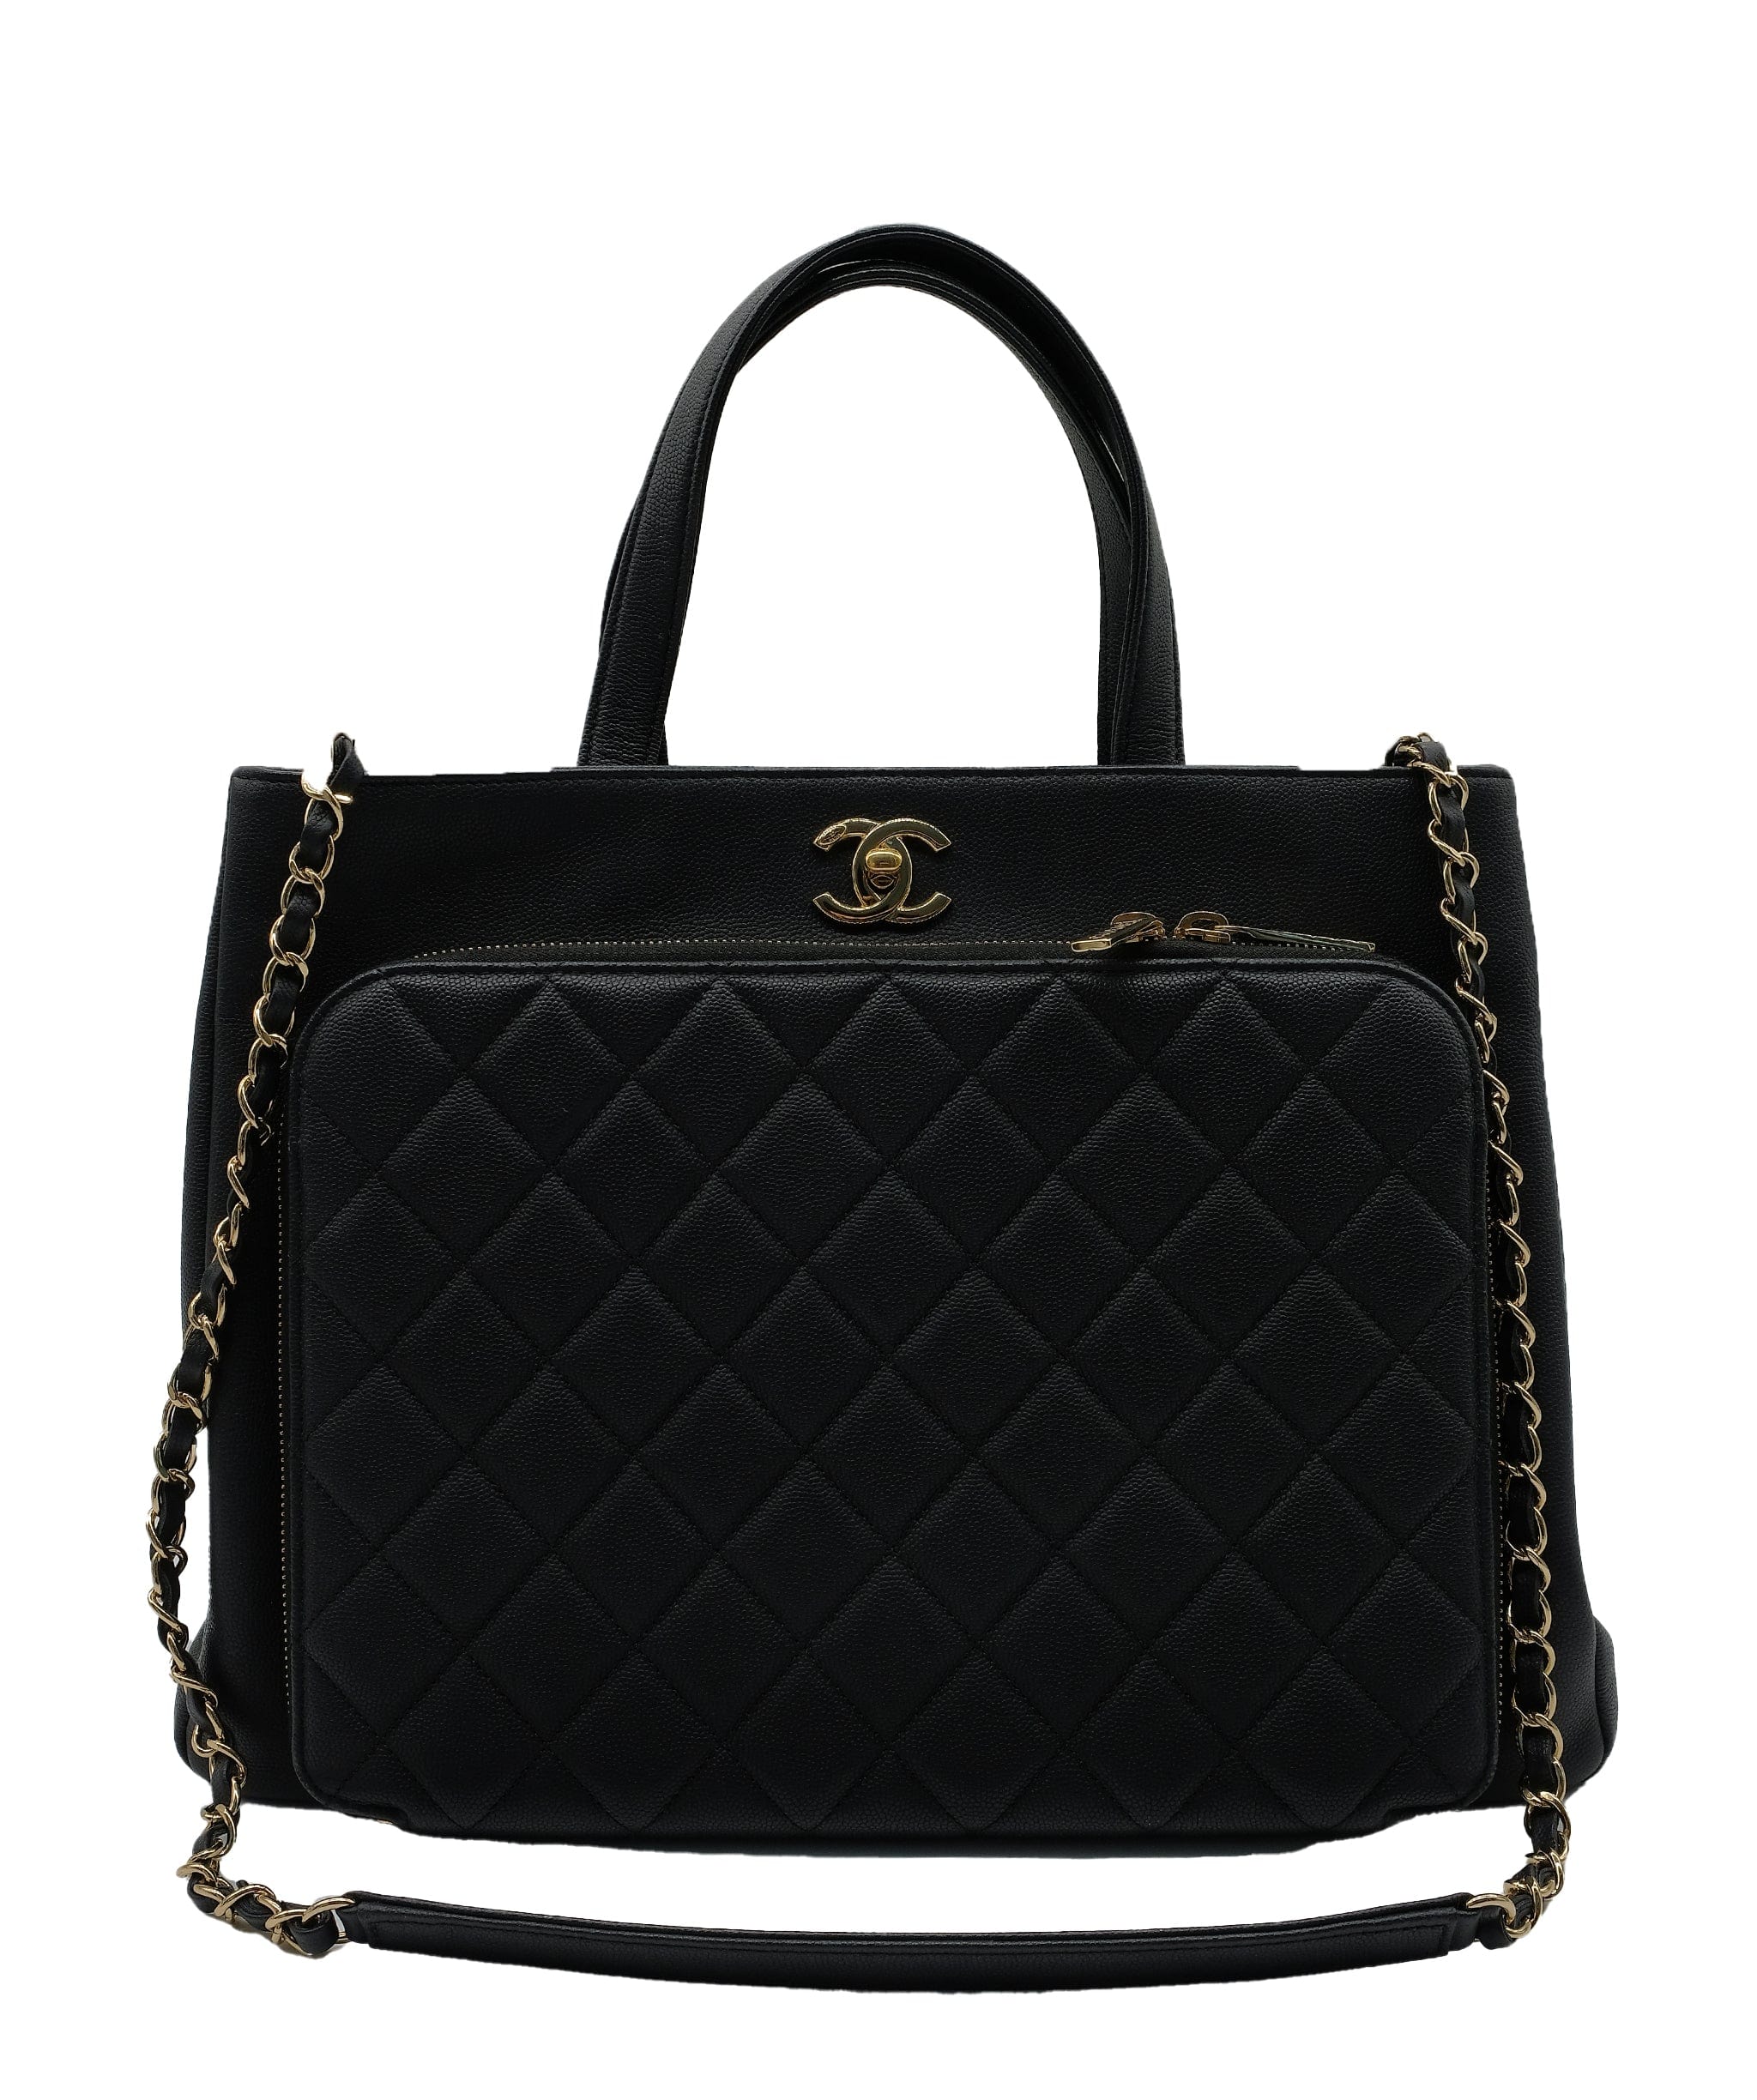 Chanel Chanel Caviar Business bag